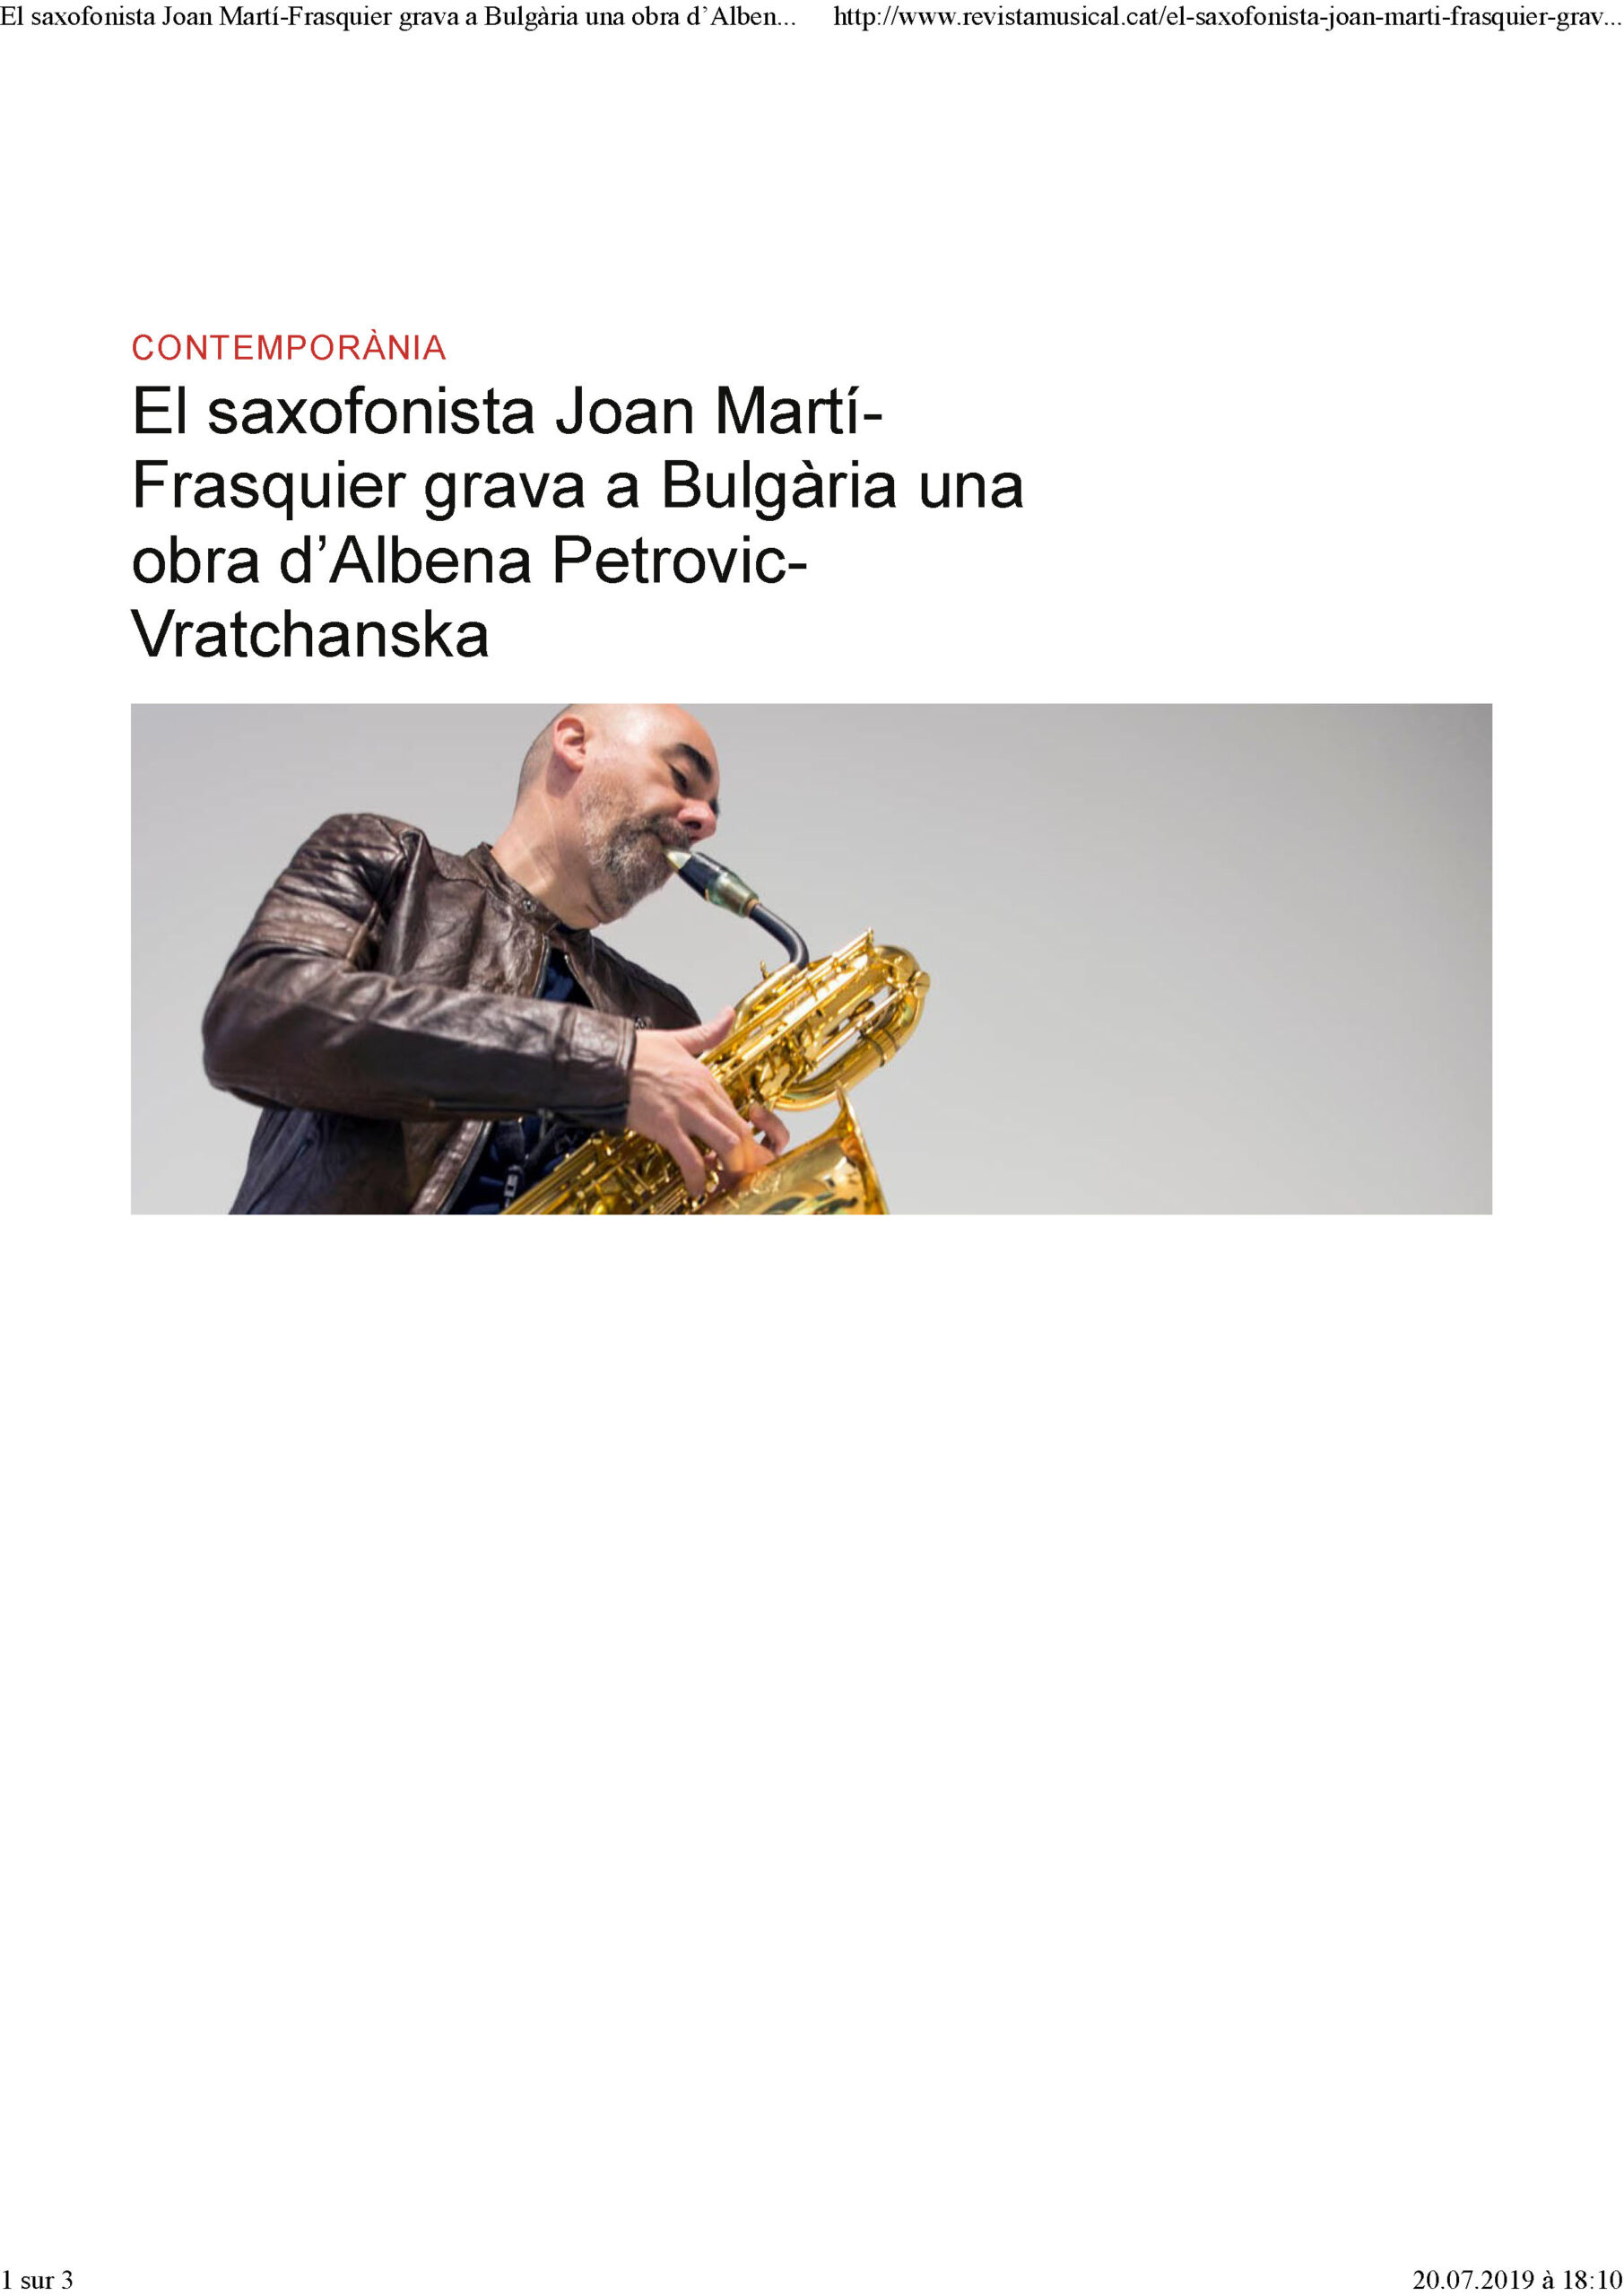 revista_musical_catalana_2019_07_20_Page_1